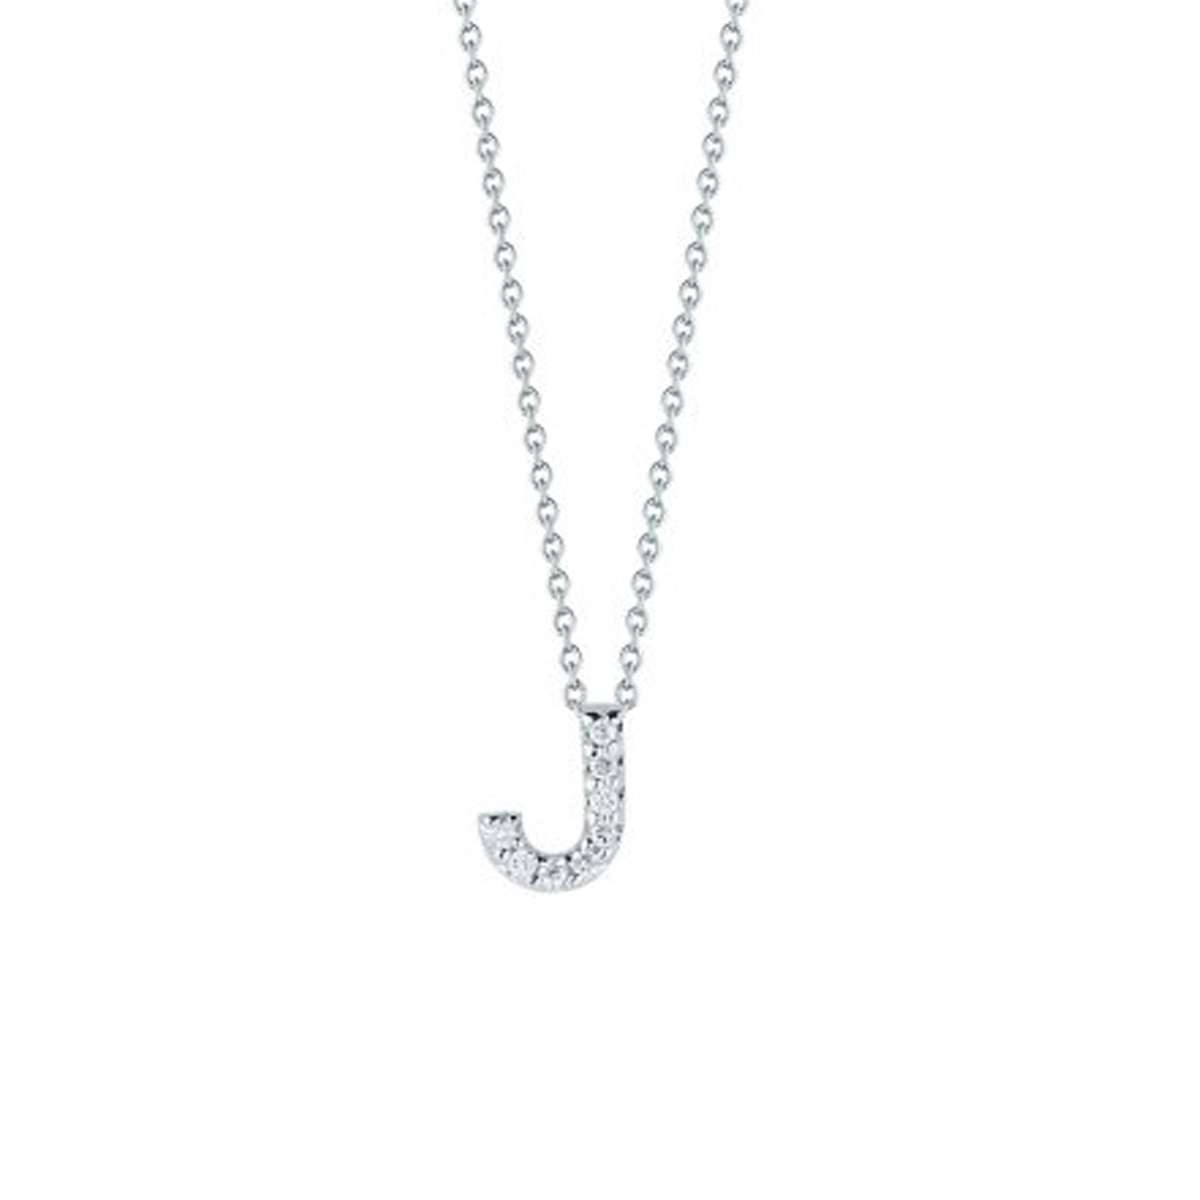 18K White Gold Diamond "J" Pendant with Chain